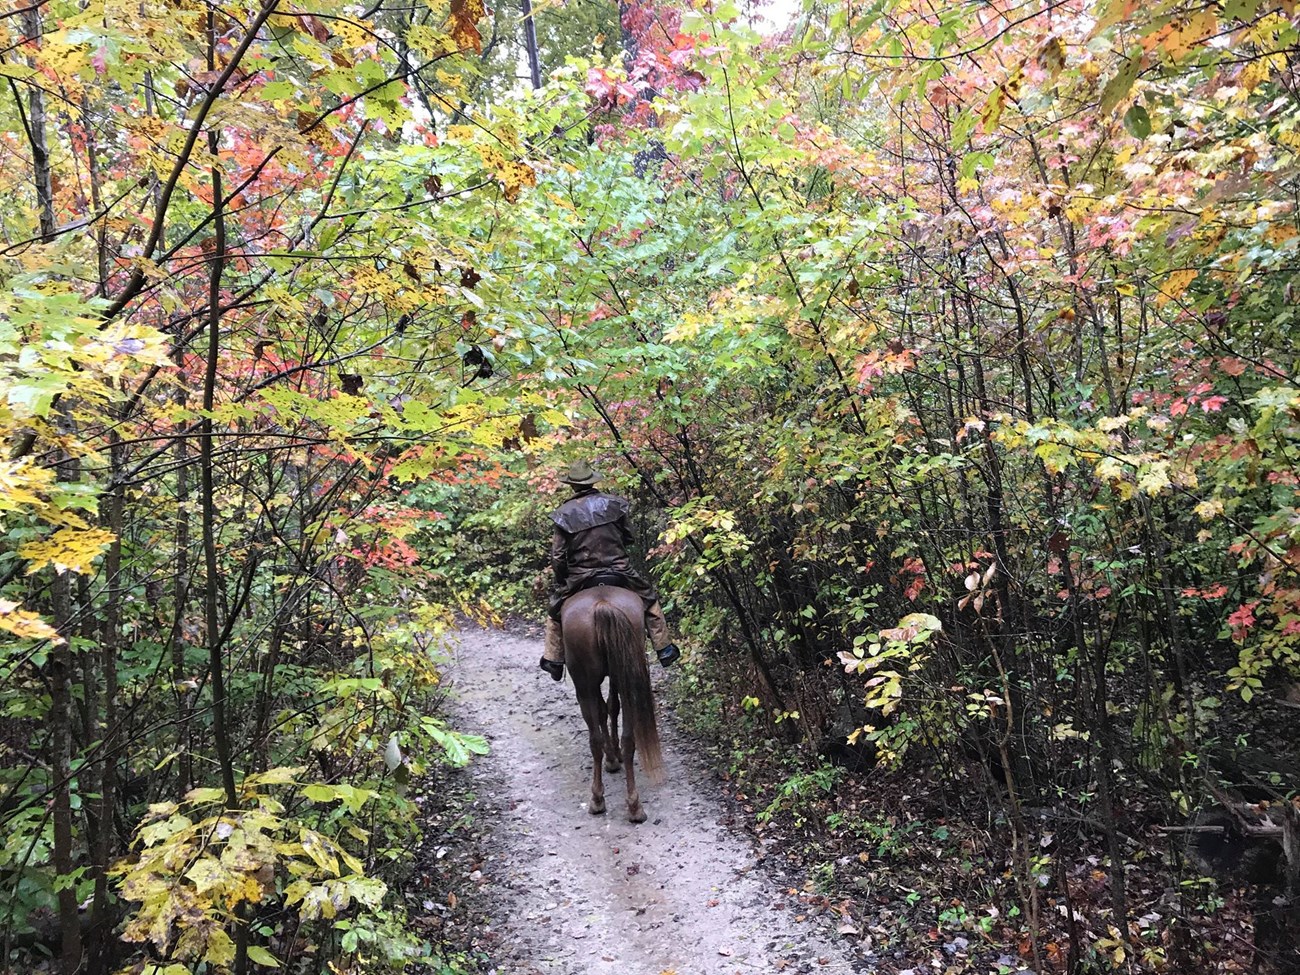 A horse and rider on a dirt trail through fall foliage.